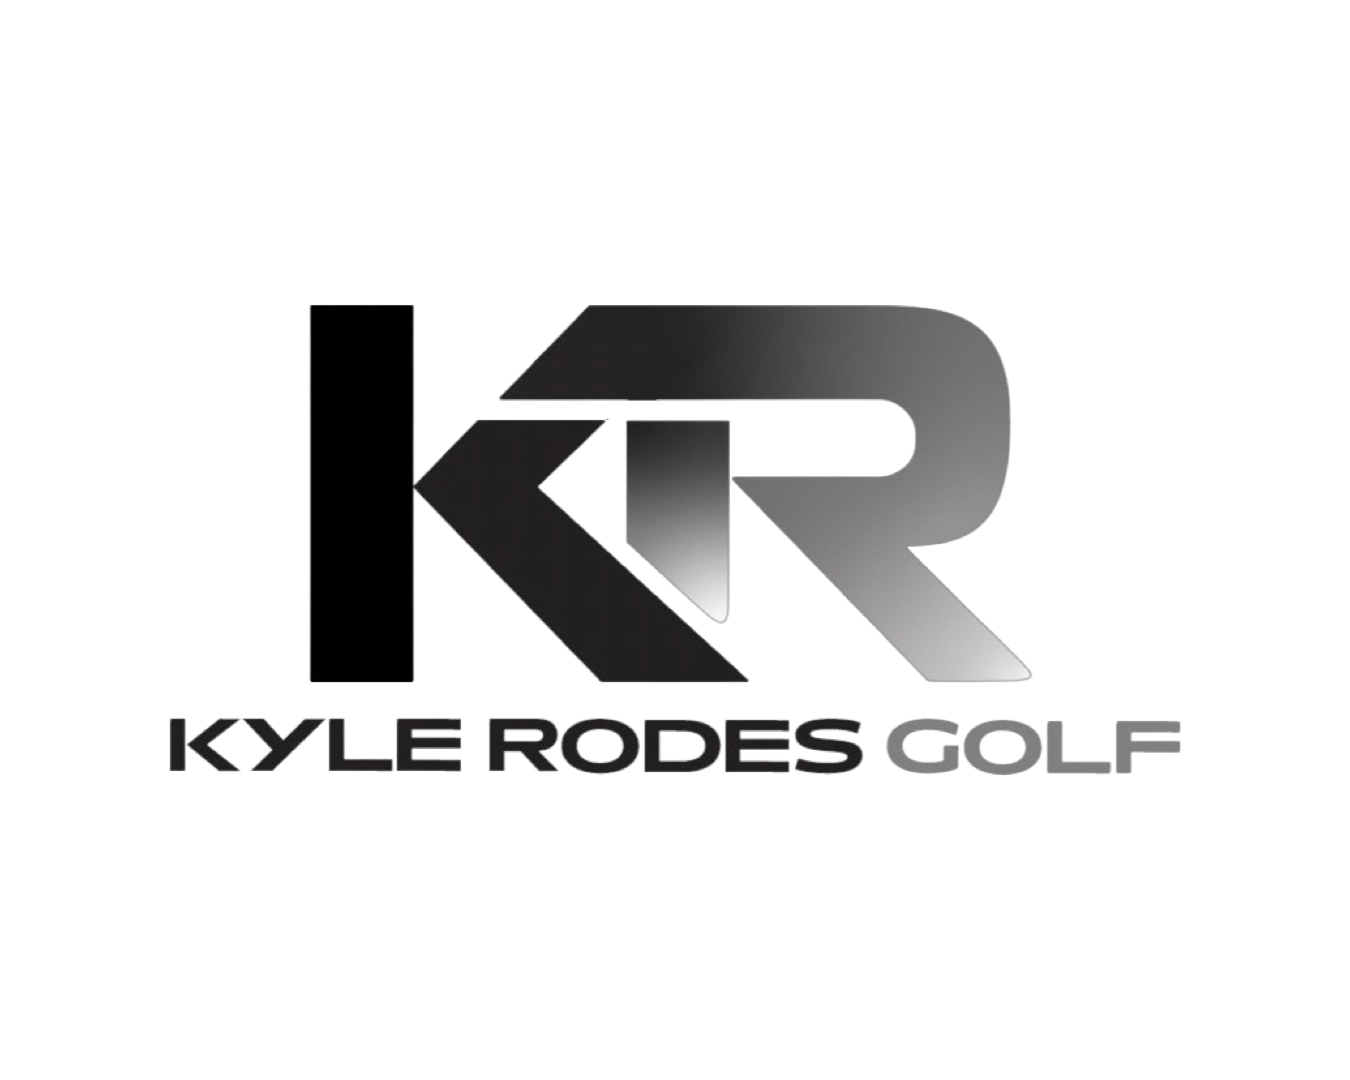 Kyle Rodes Golf